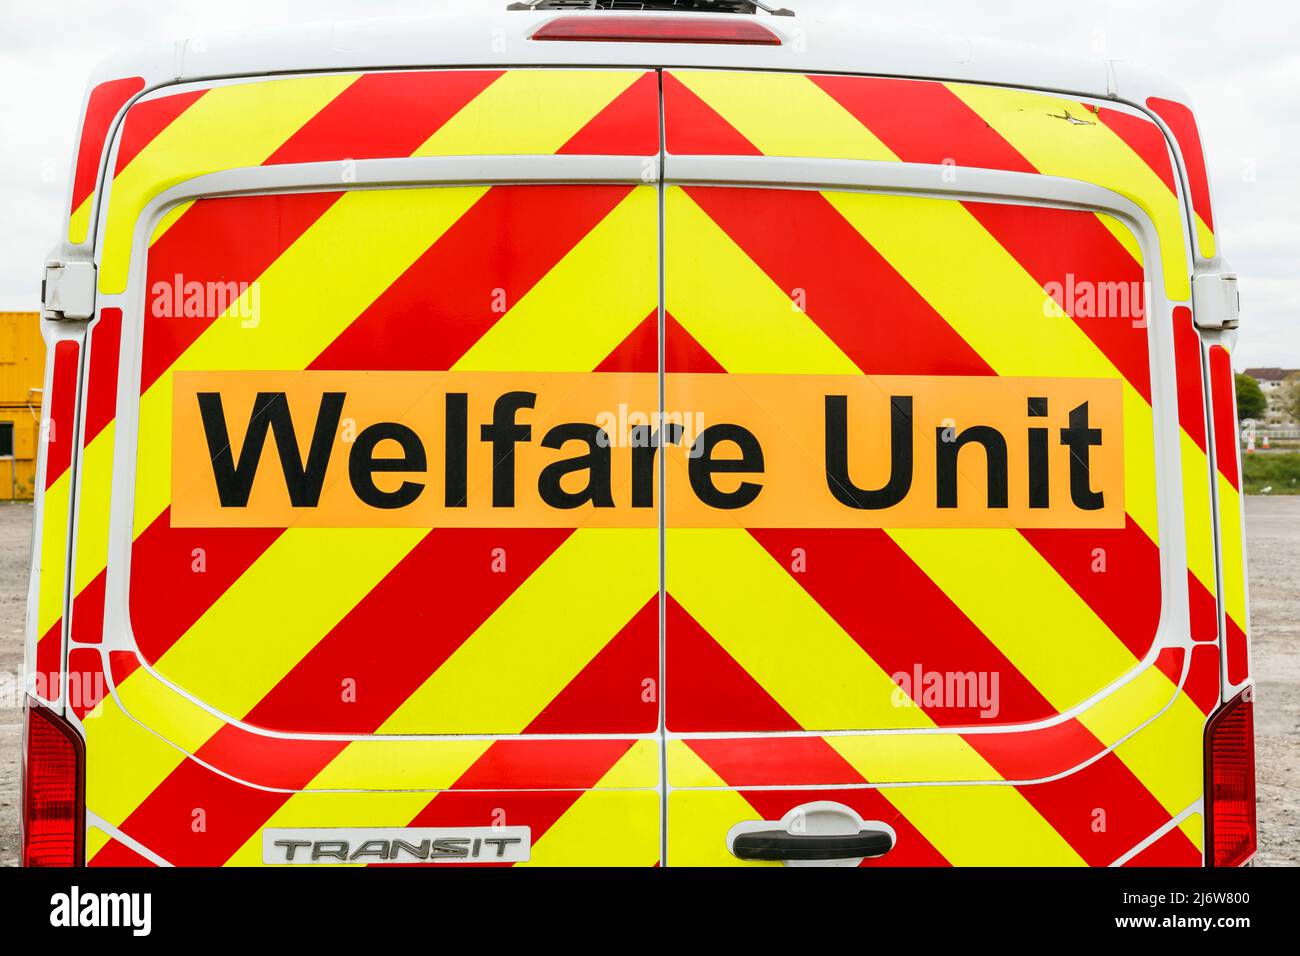 Welfare Unit sign on a van, UK Stock Photo